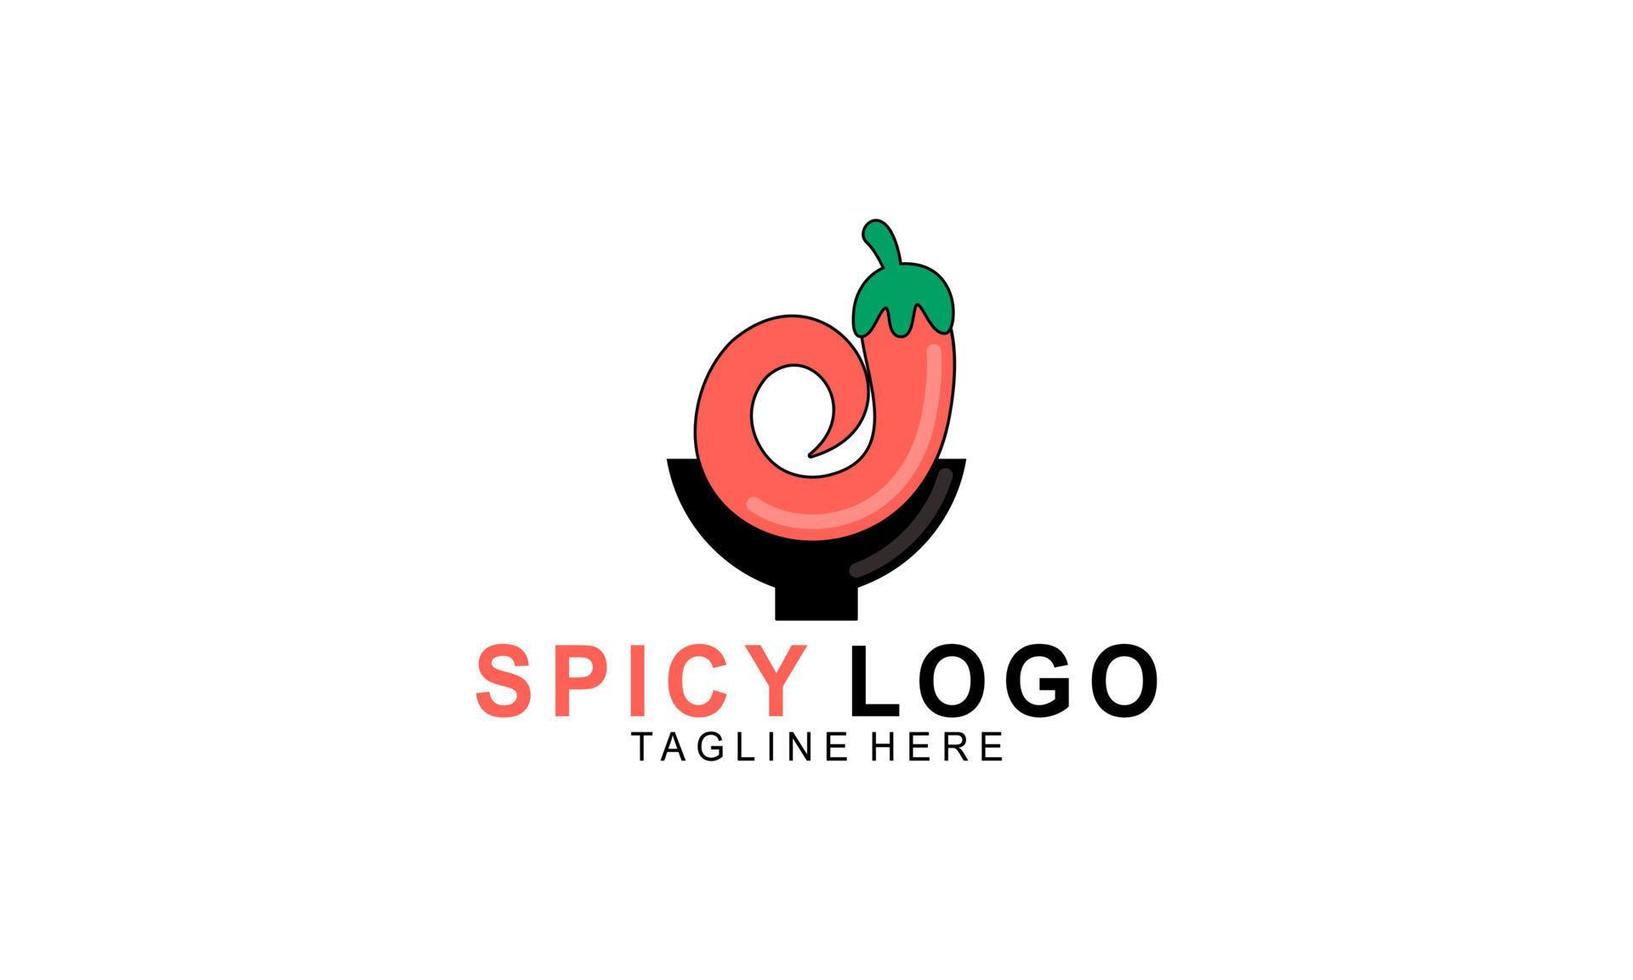 vetor de design de logotipo de comida picante